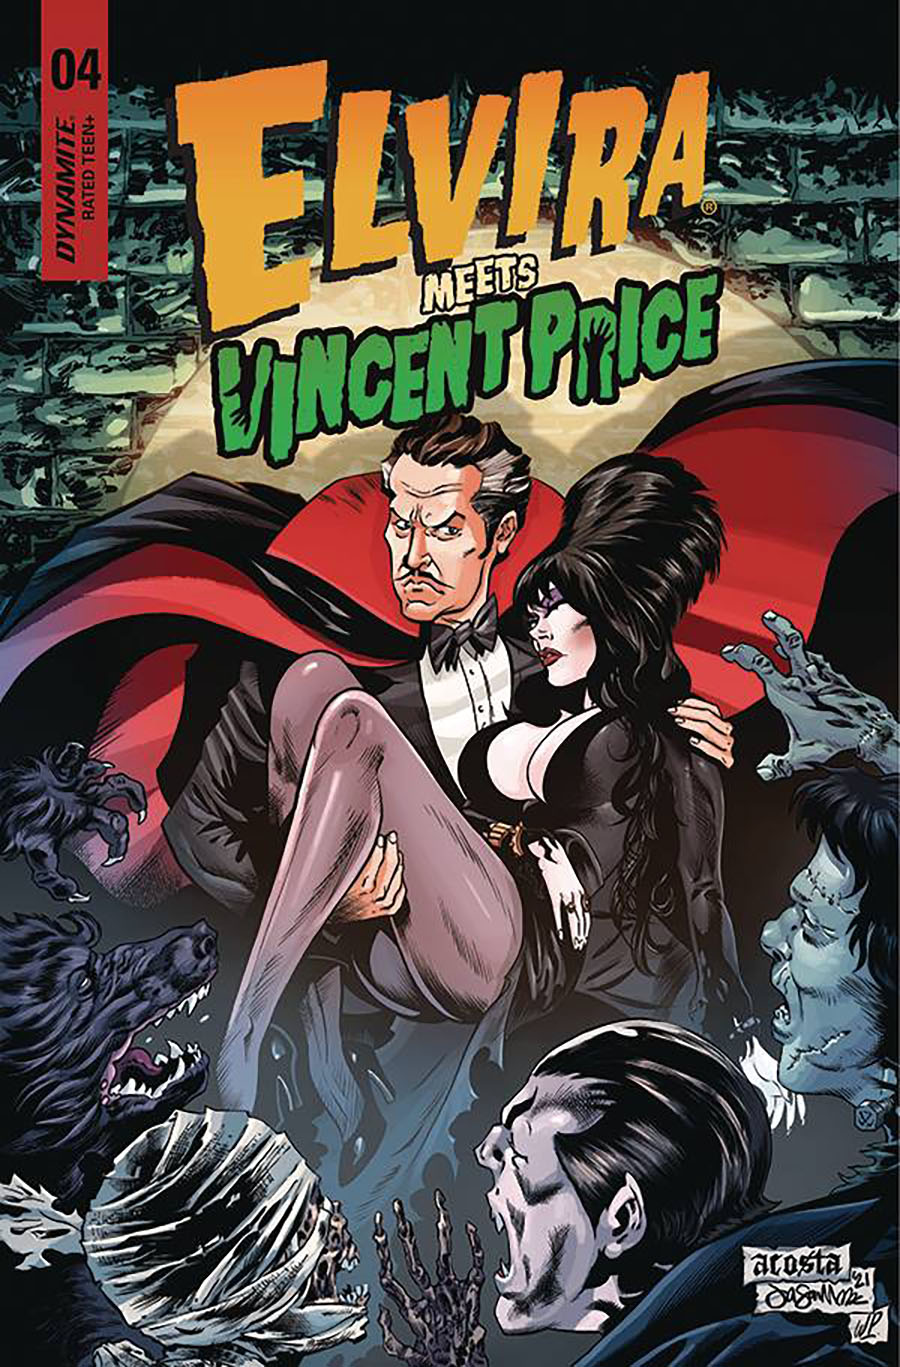 Elvira Meets Vincent Price #4 Cover A Regular Dave Acosta Cover